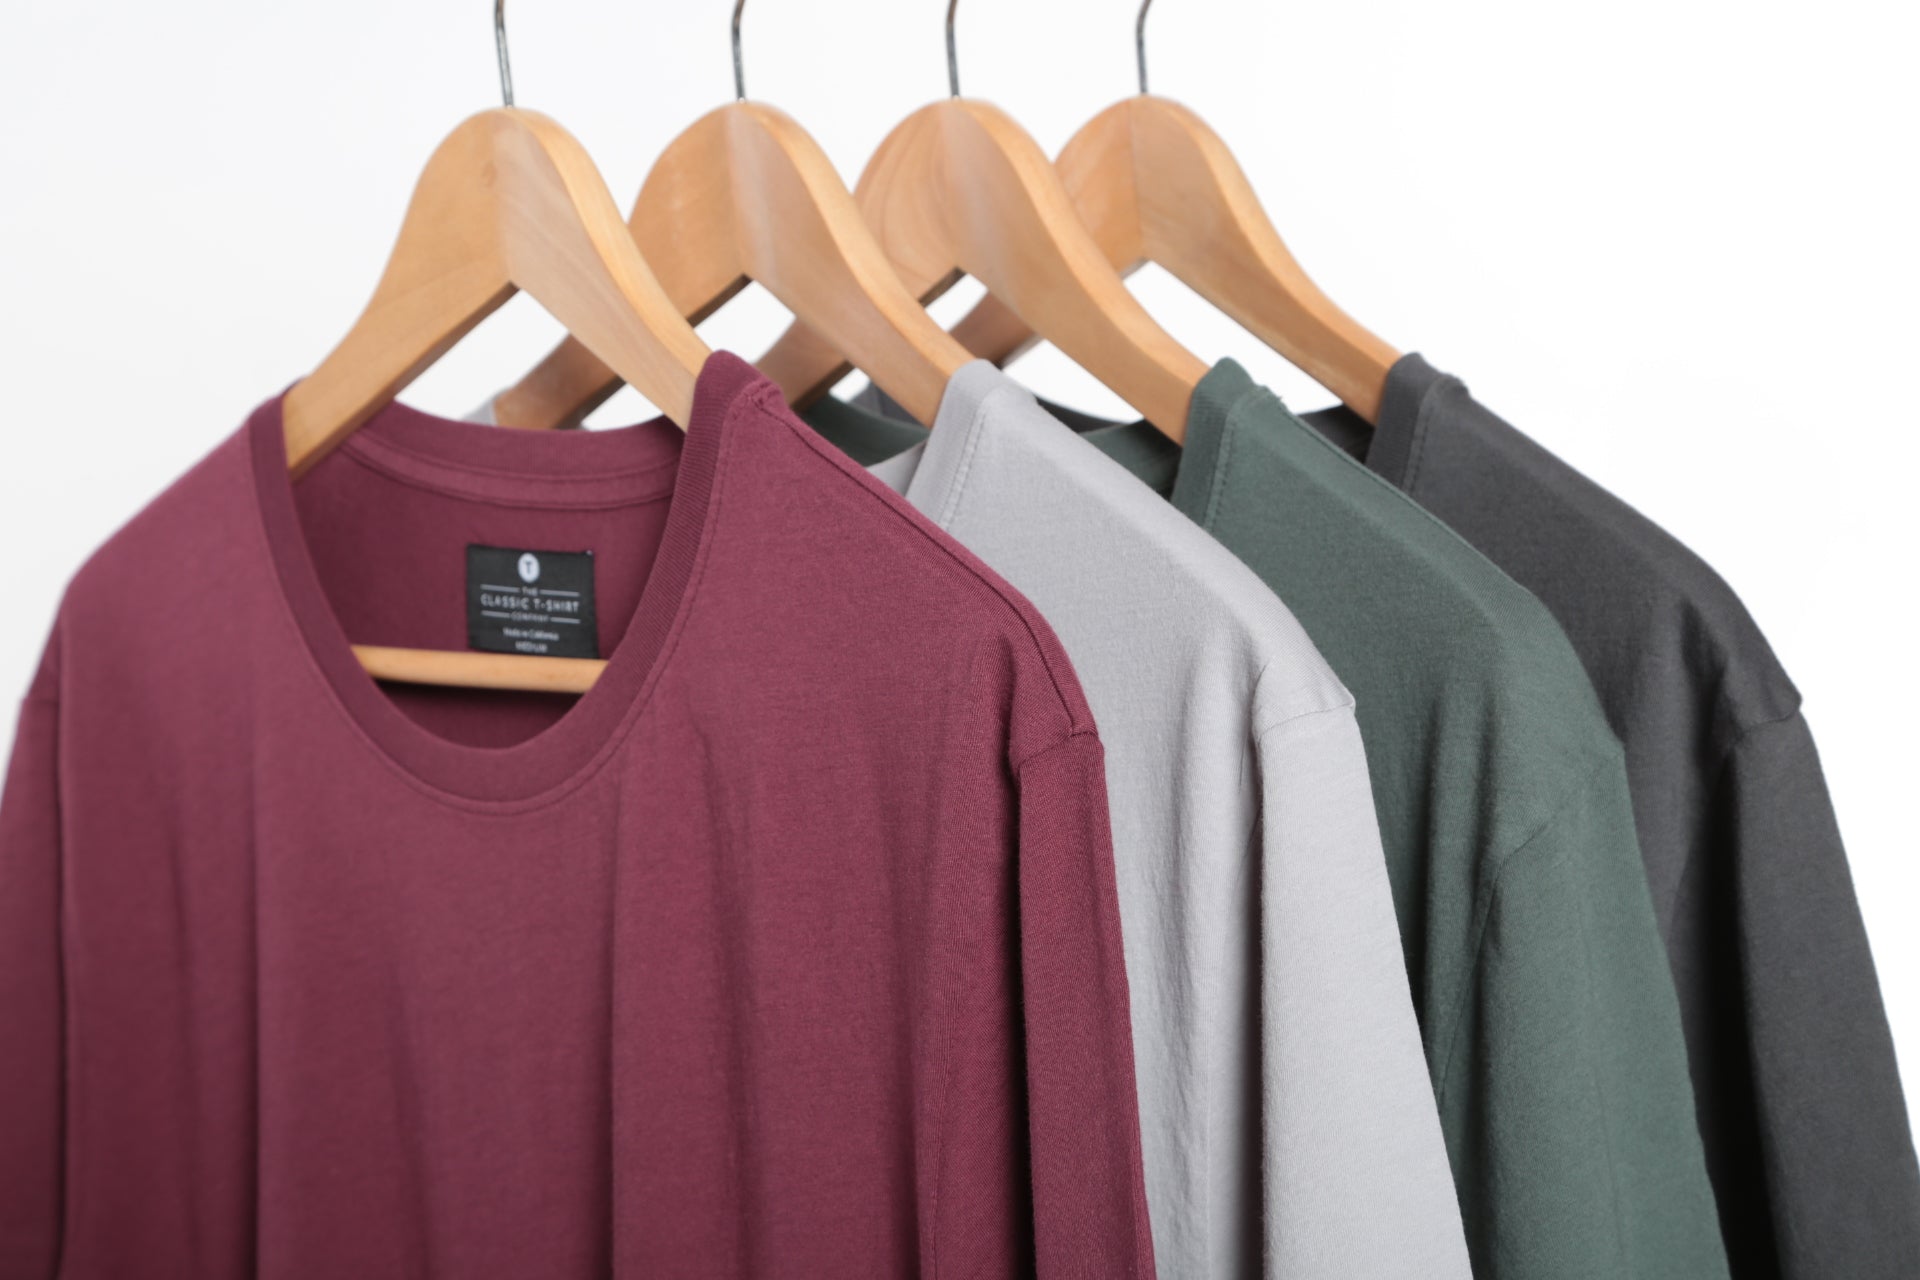 Men's Organic Cotton Crew-neck Undershirt - Natural Clothing Company